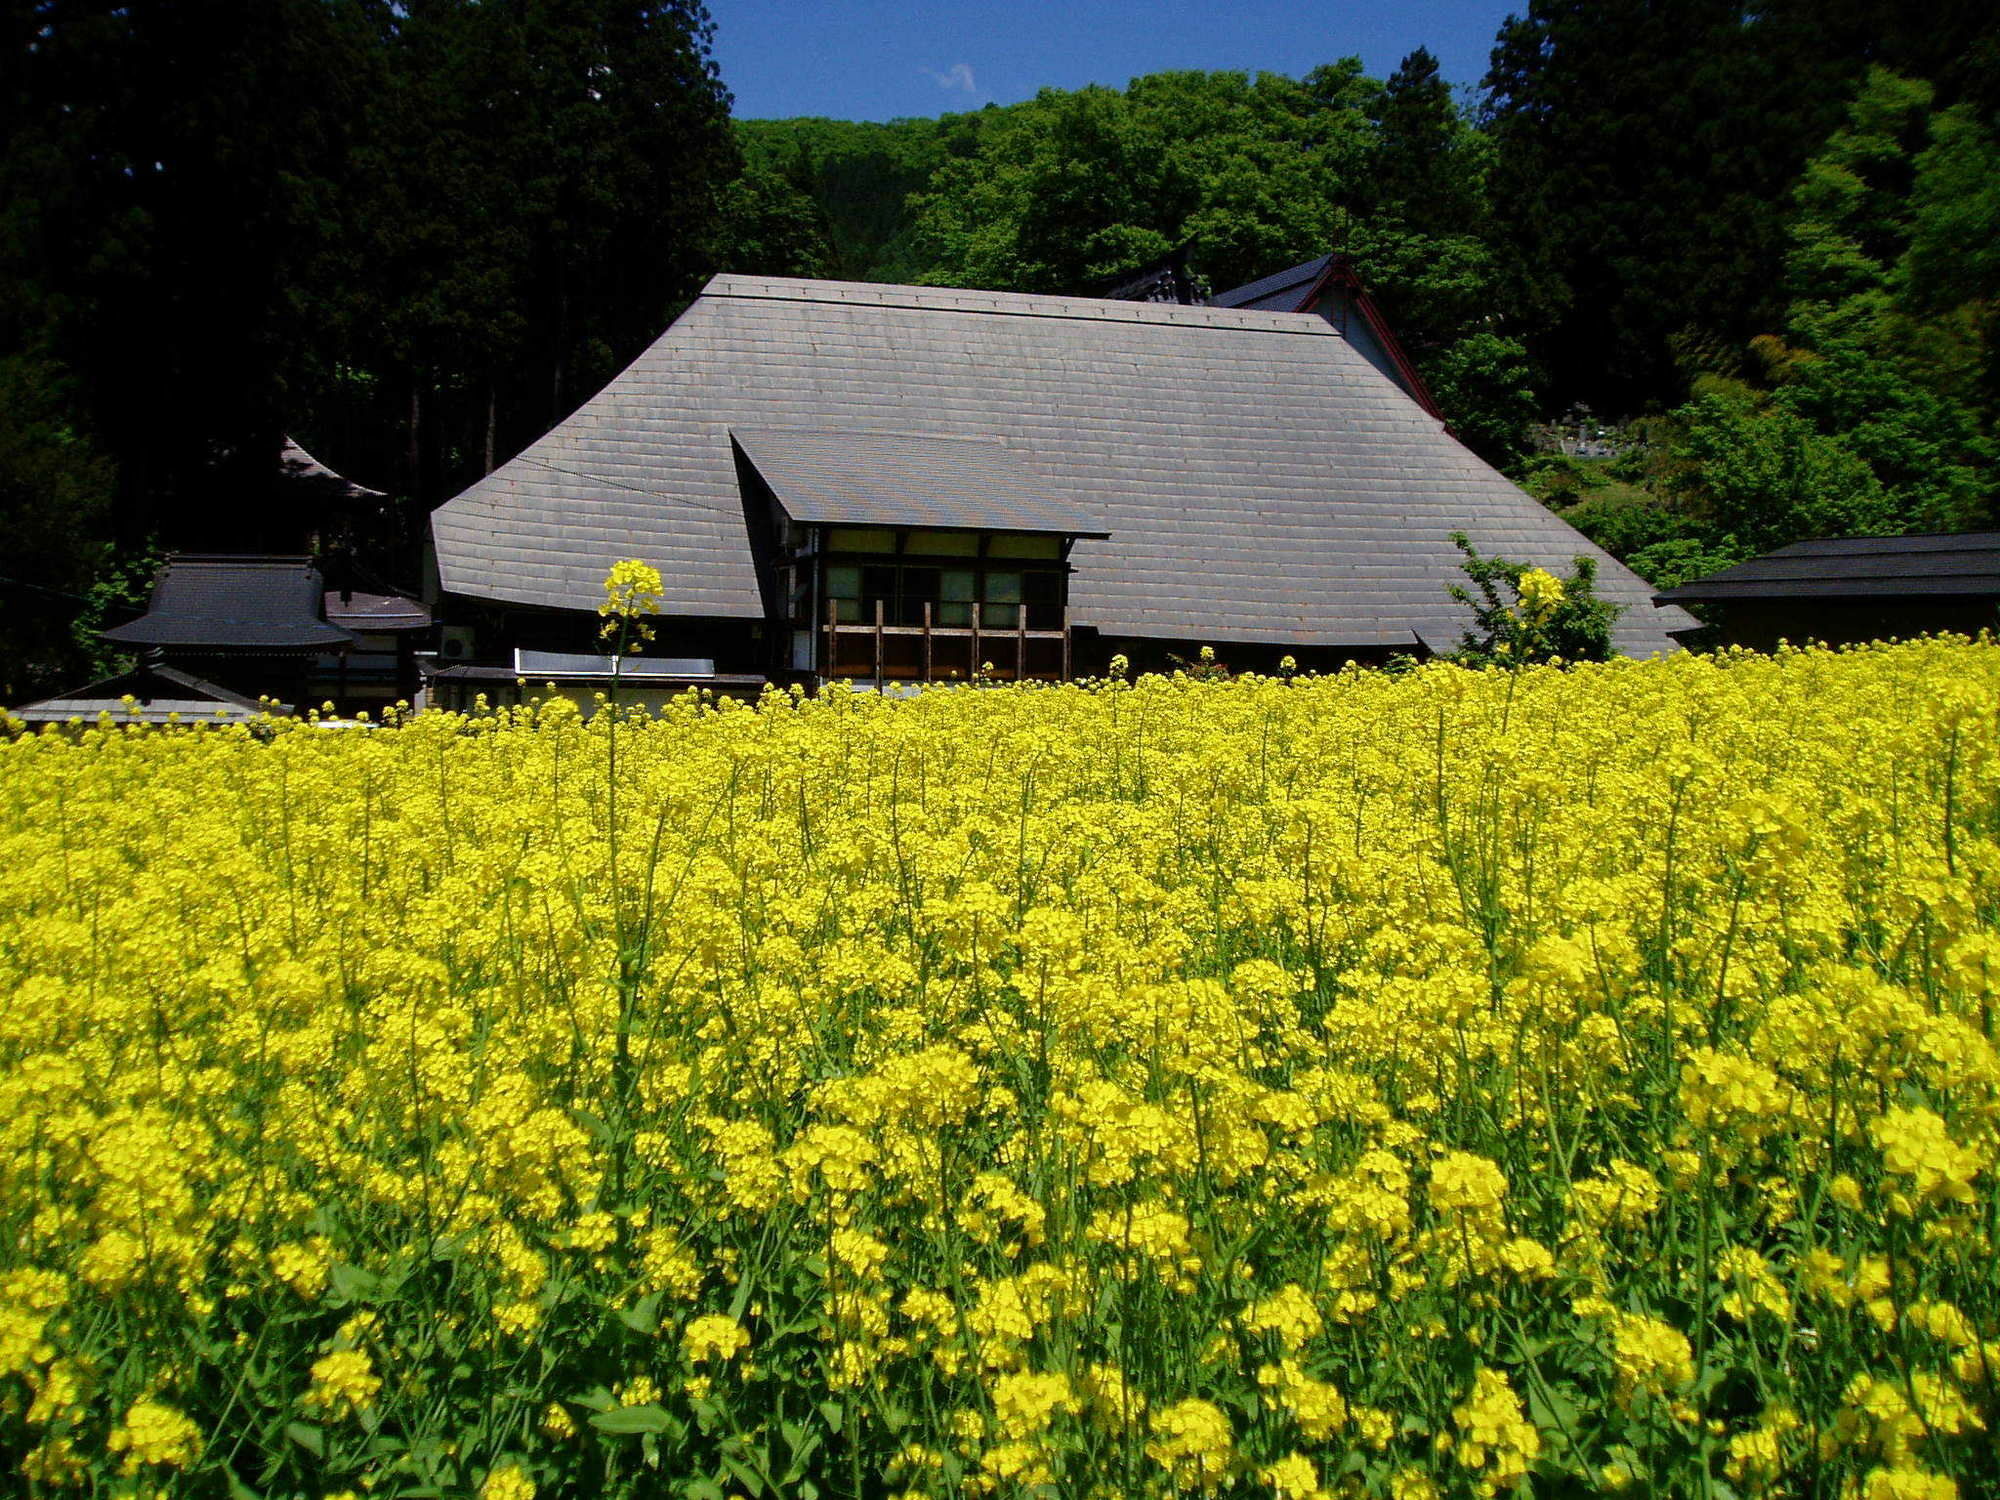 Lodge Matsuya Nozawaonsen Exterior photo